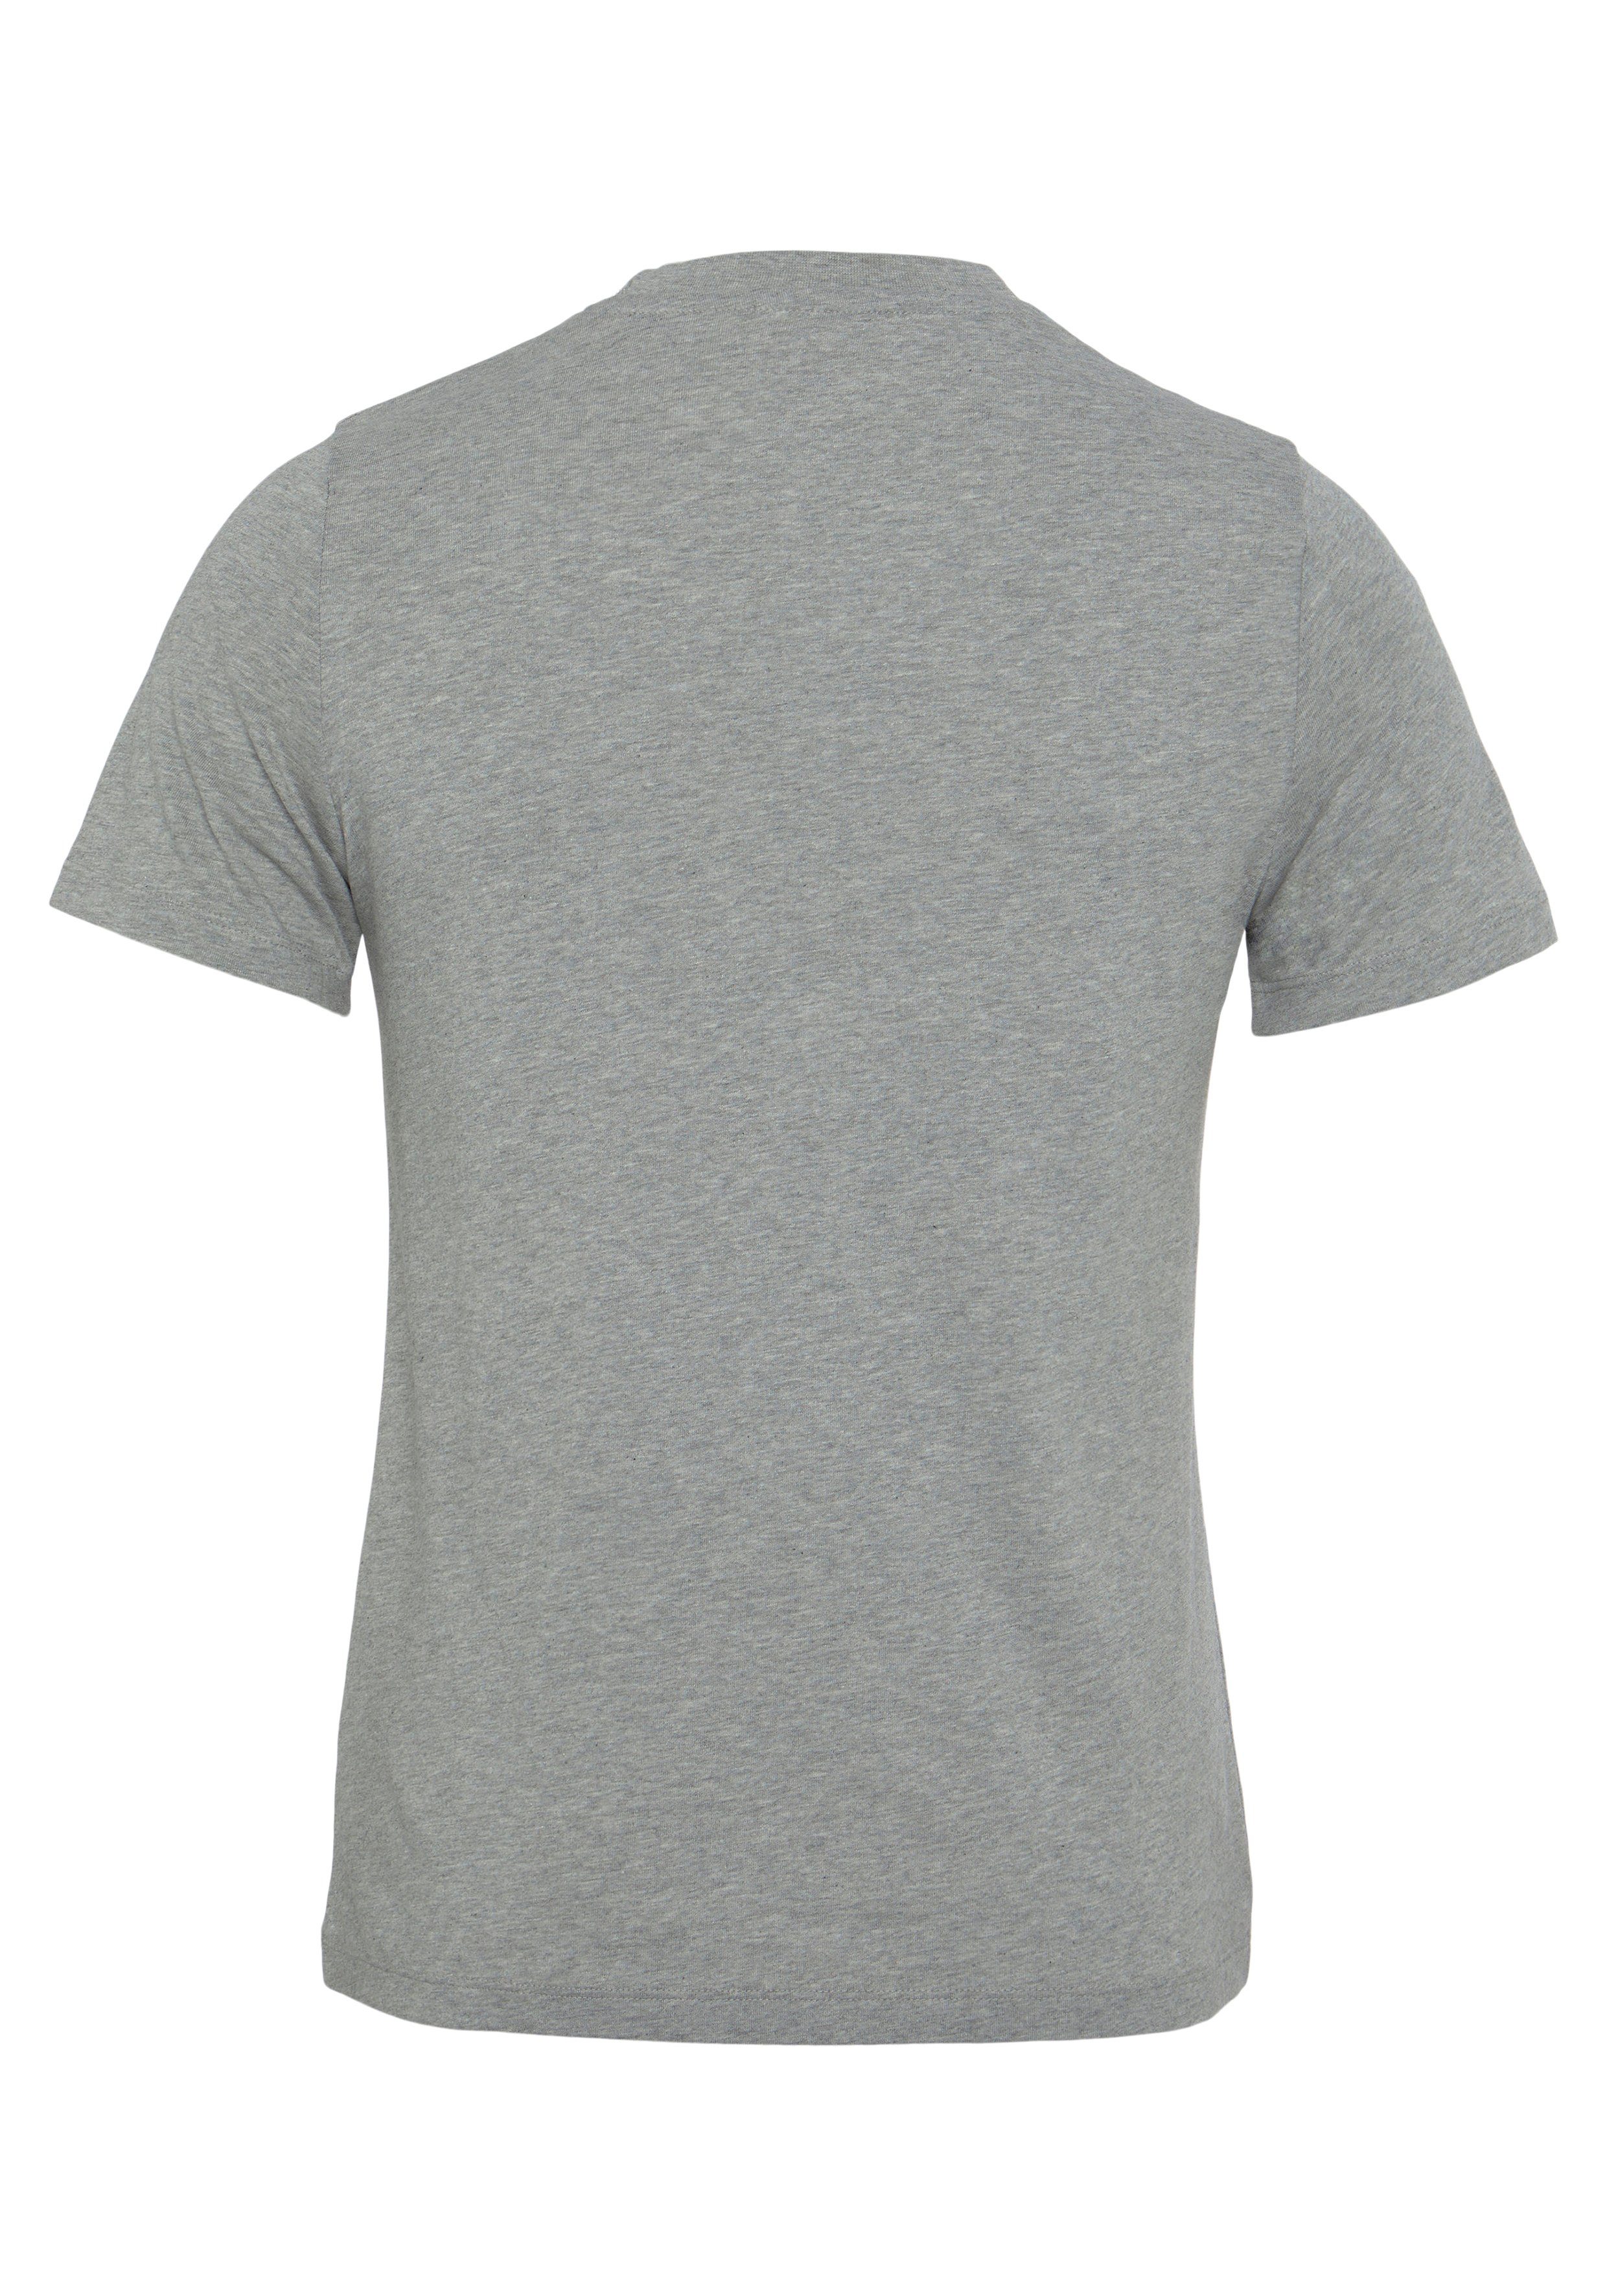 Reebok T-Shirt Reebok Read Tee grey medium heather Graphic